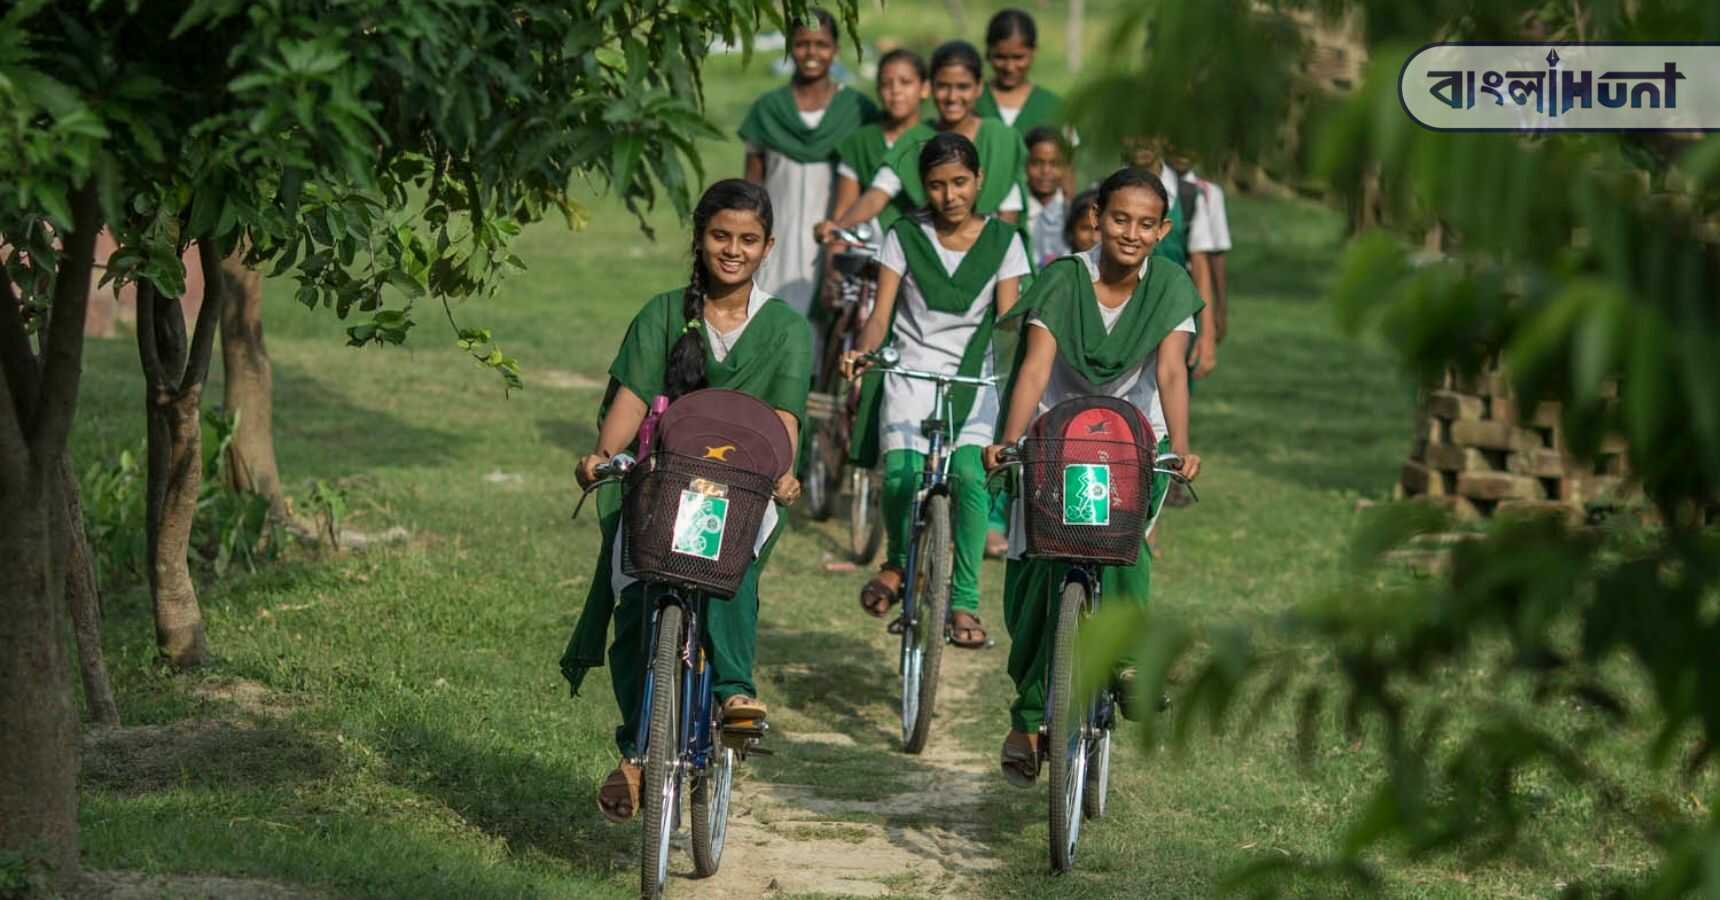 &#039;Sabuj Sathi&#039;,Students,West Bengal,Mamata Banerjee,State Government,Government,Cycle,Bicycle